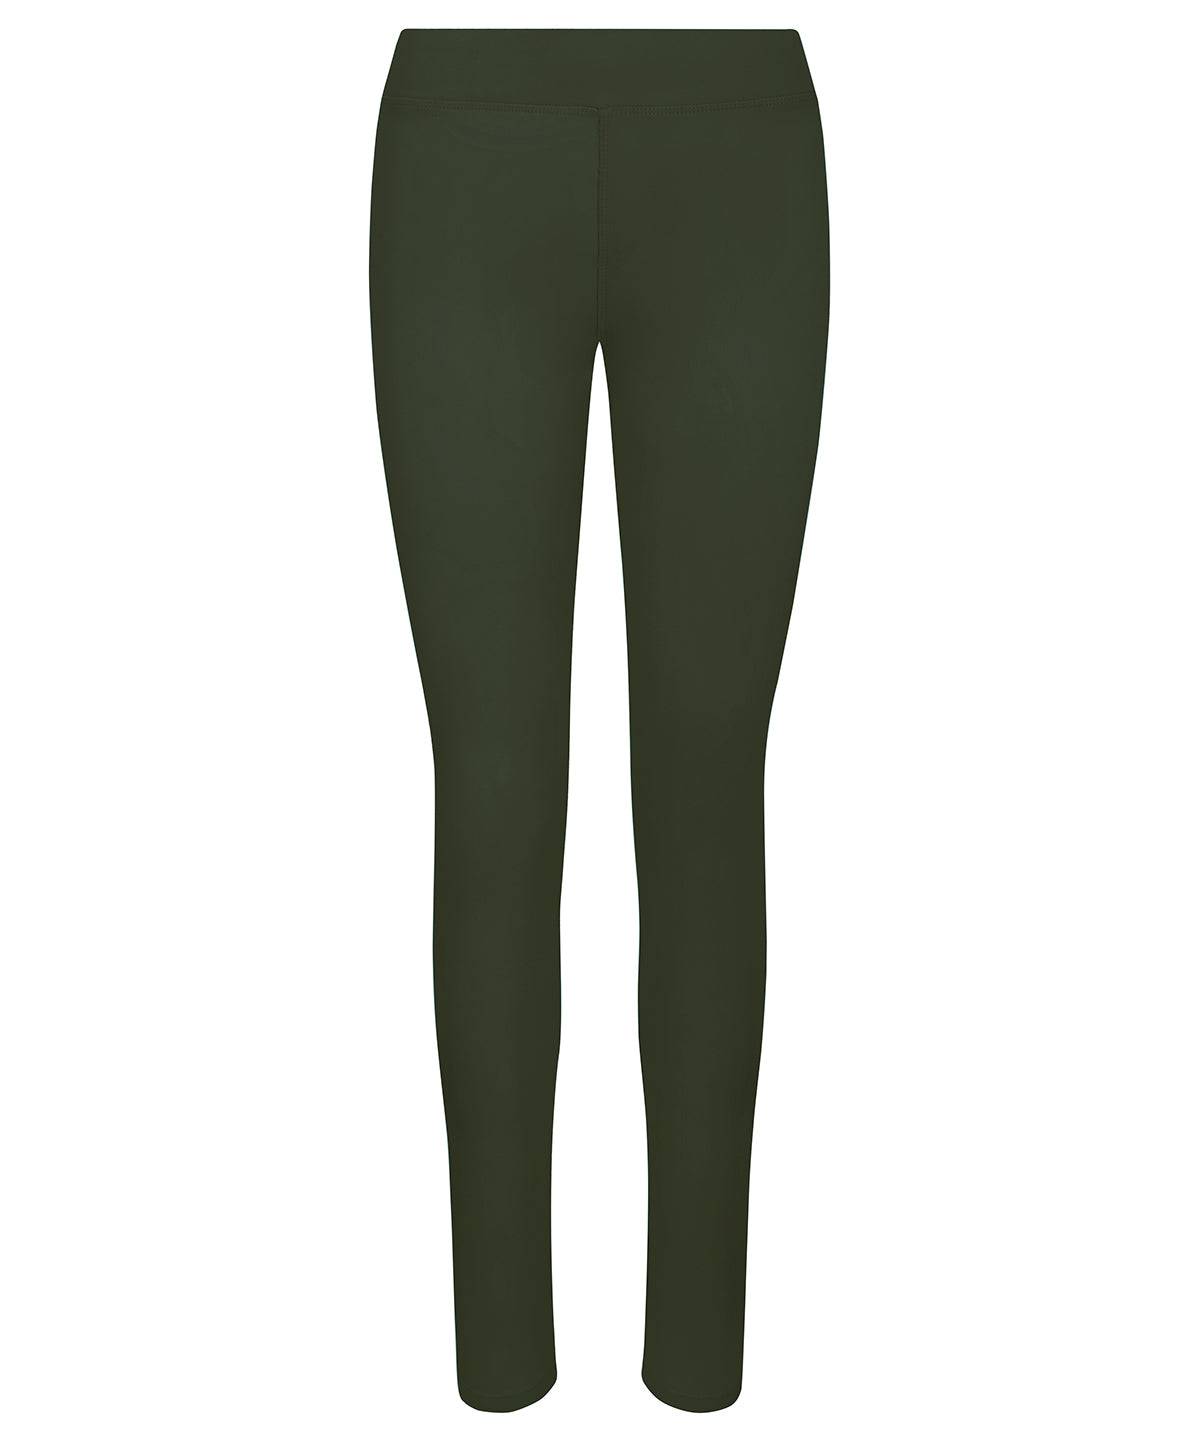 Combat Green - Women's cool workout leggings